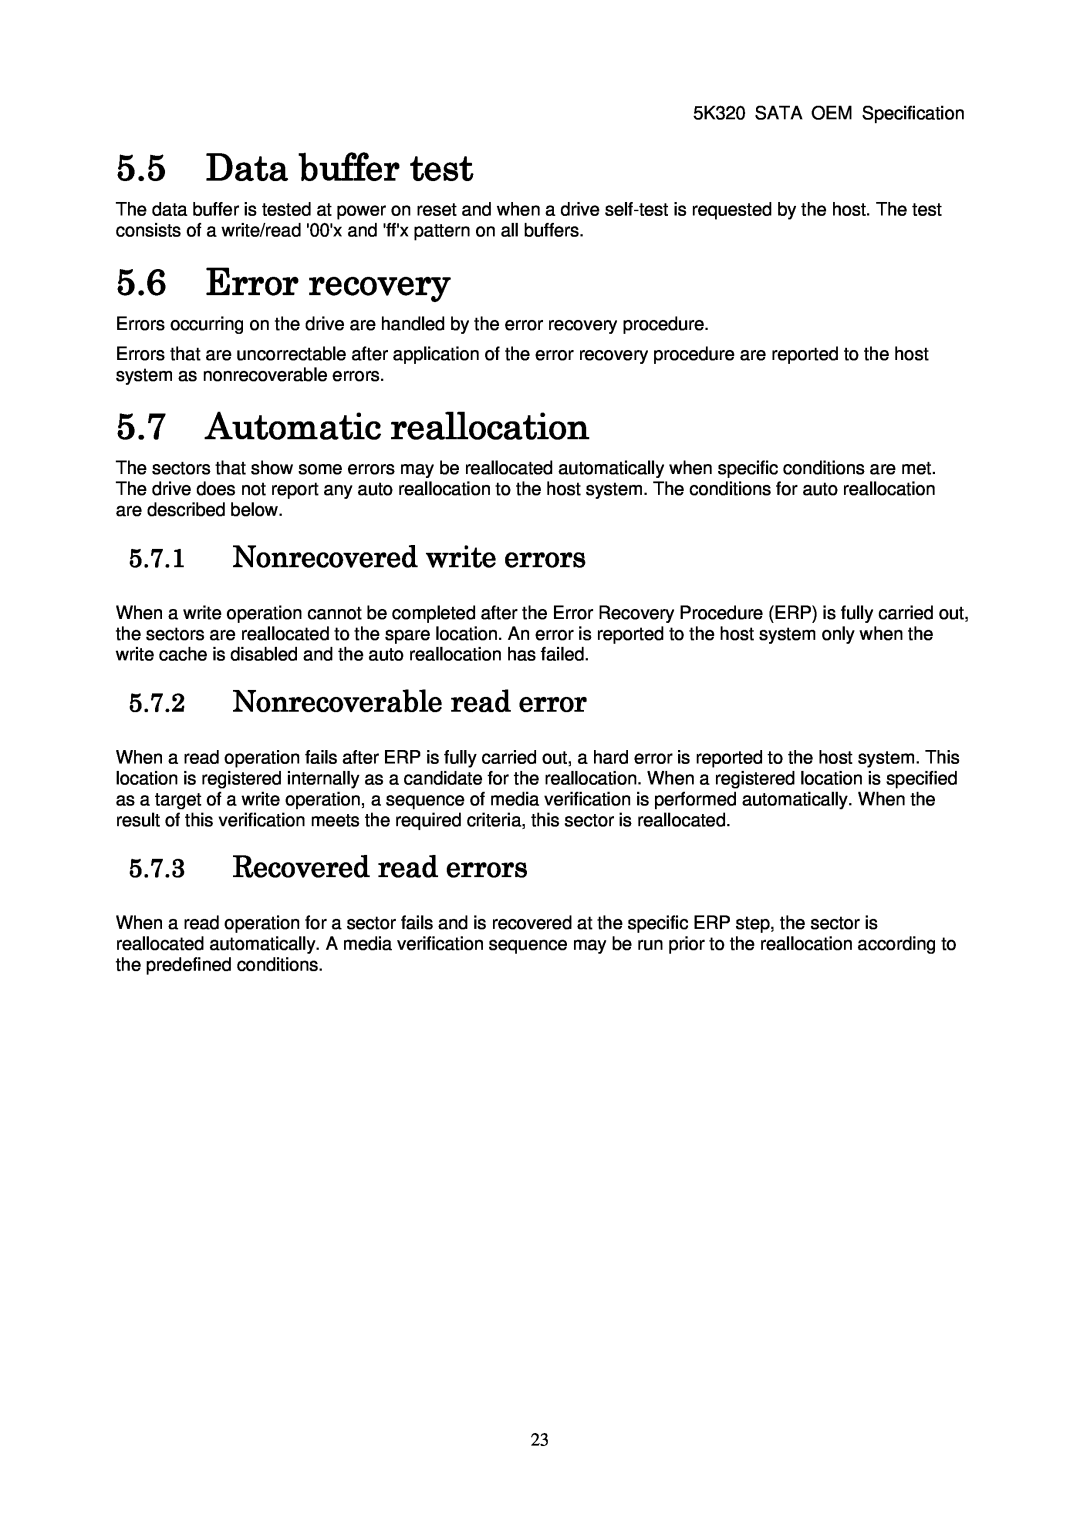 Hitachi HTS543216L9A300 5.5Data buffer test, 5.6Error recovery, 5.7Automatic reallocation, 5.7.1Nonrecovered write errors 